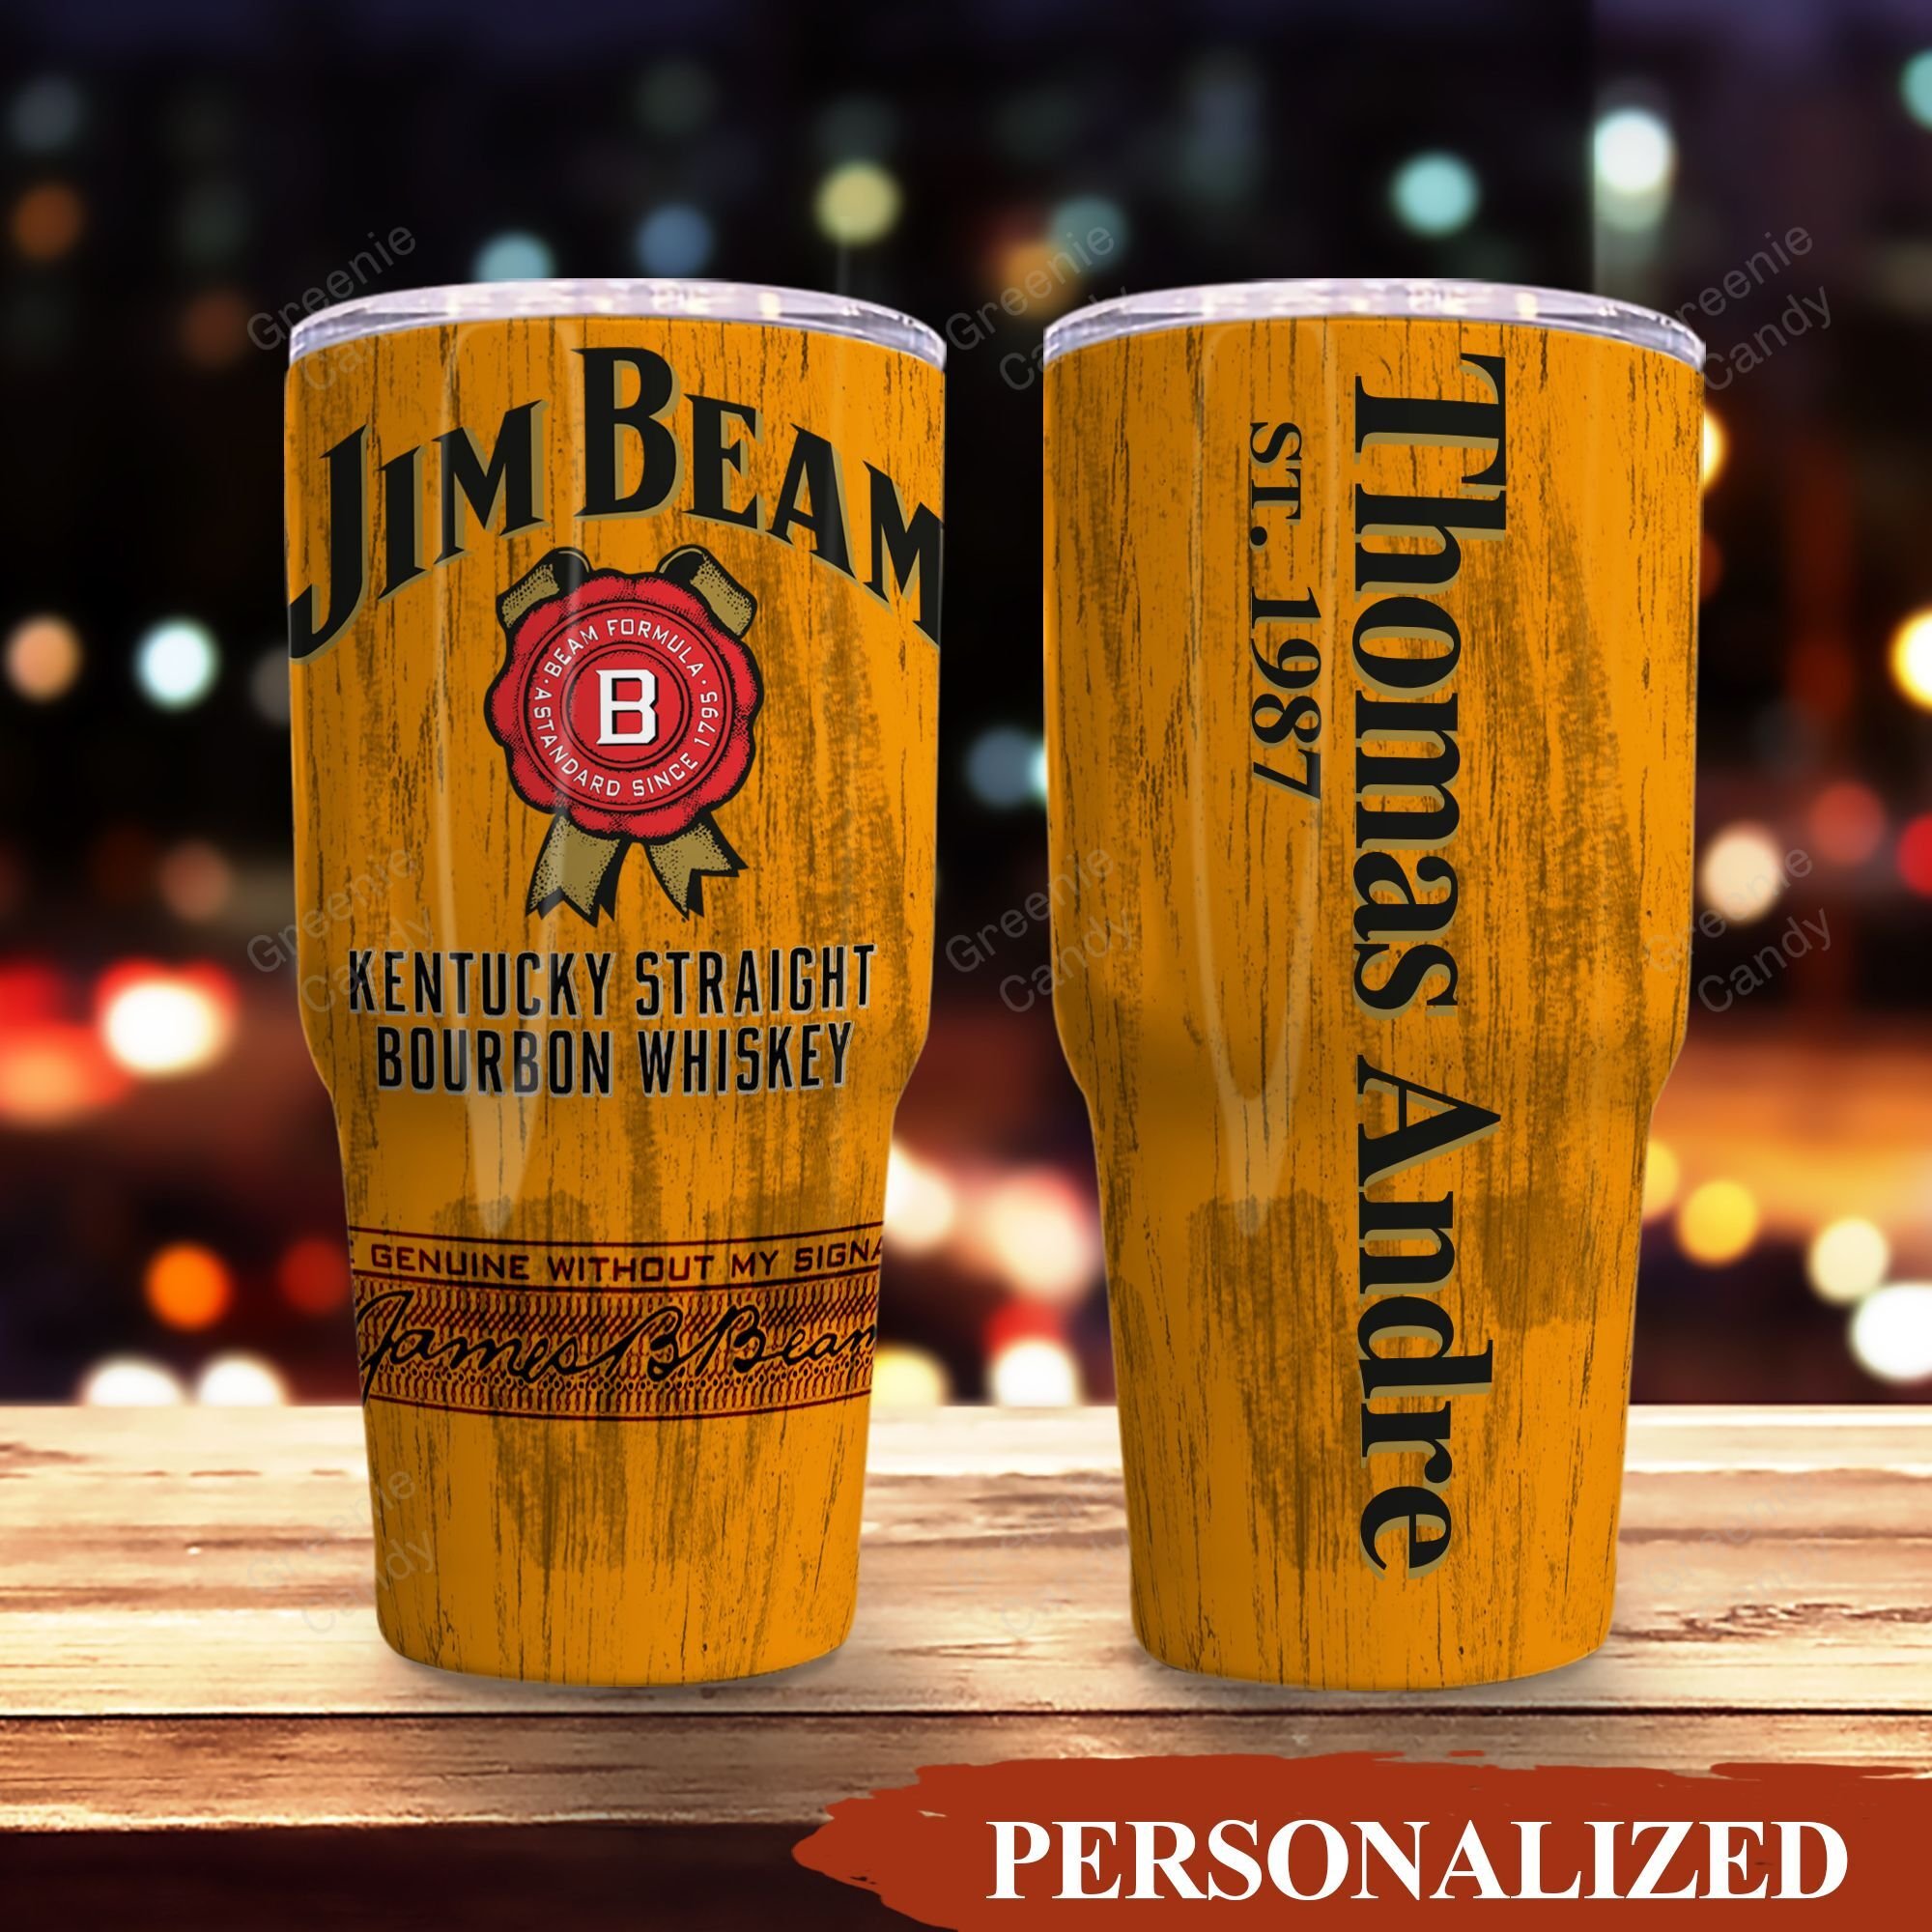 Personalized_Jim_Beam_Kentucky_Straight_Bourbon_Whiskey_Tumbler